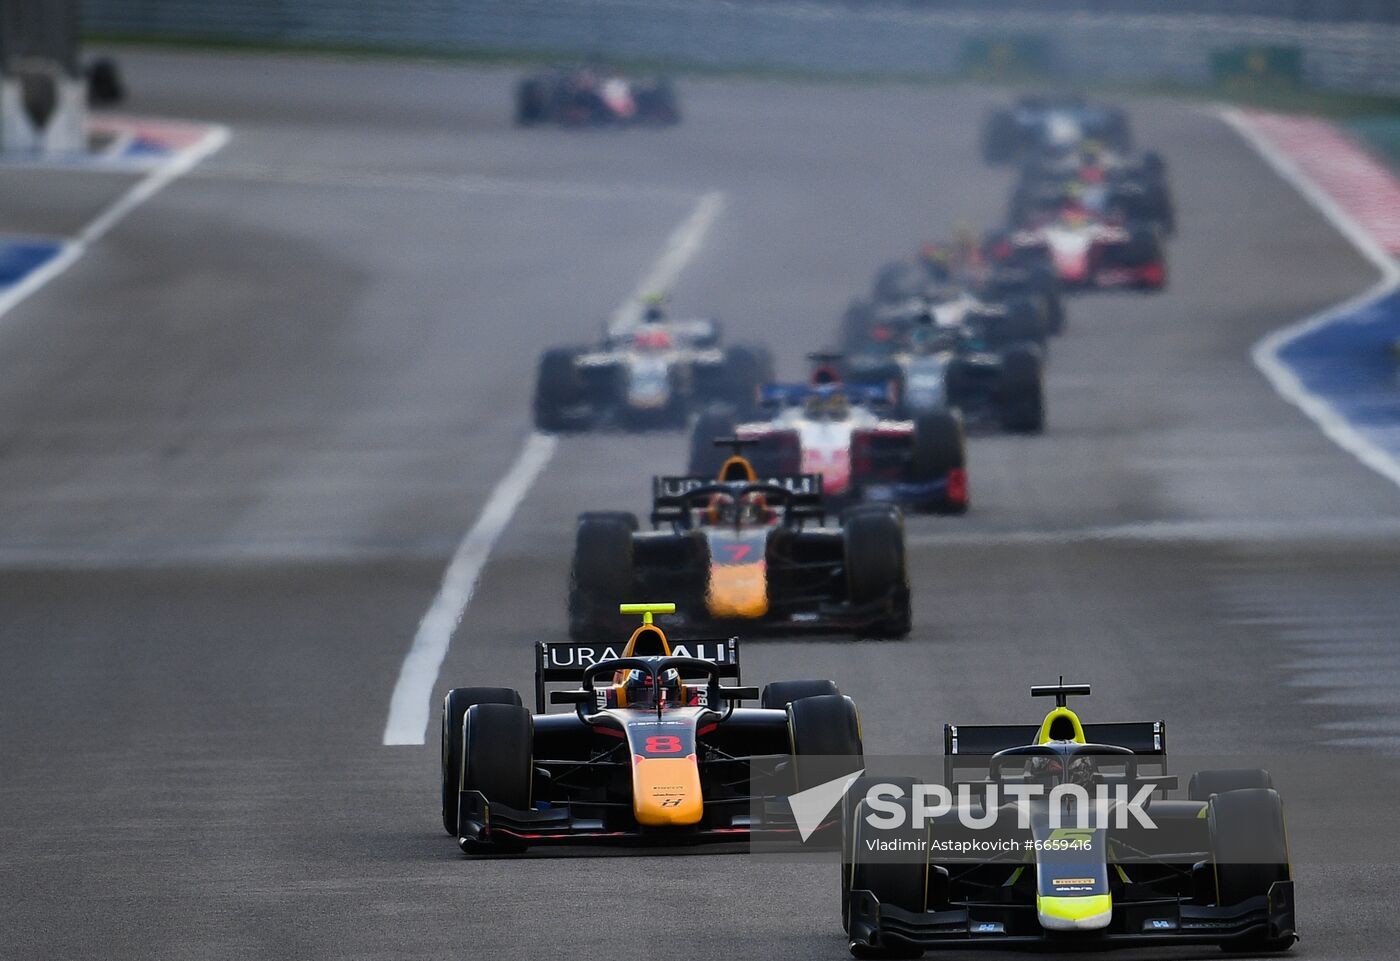 Russia Motor Sport Formula 2